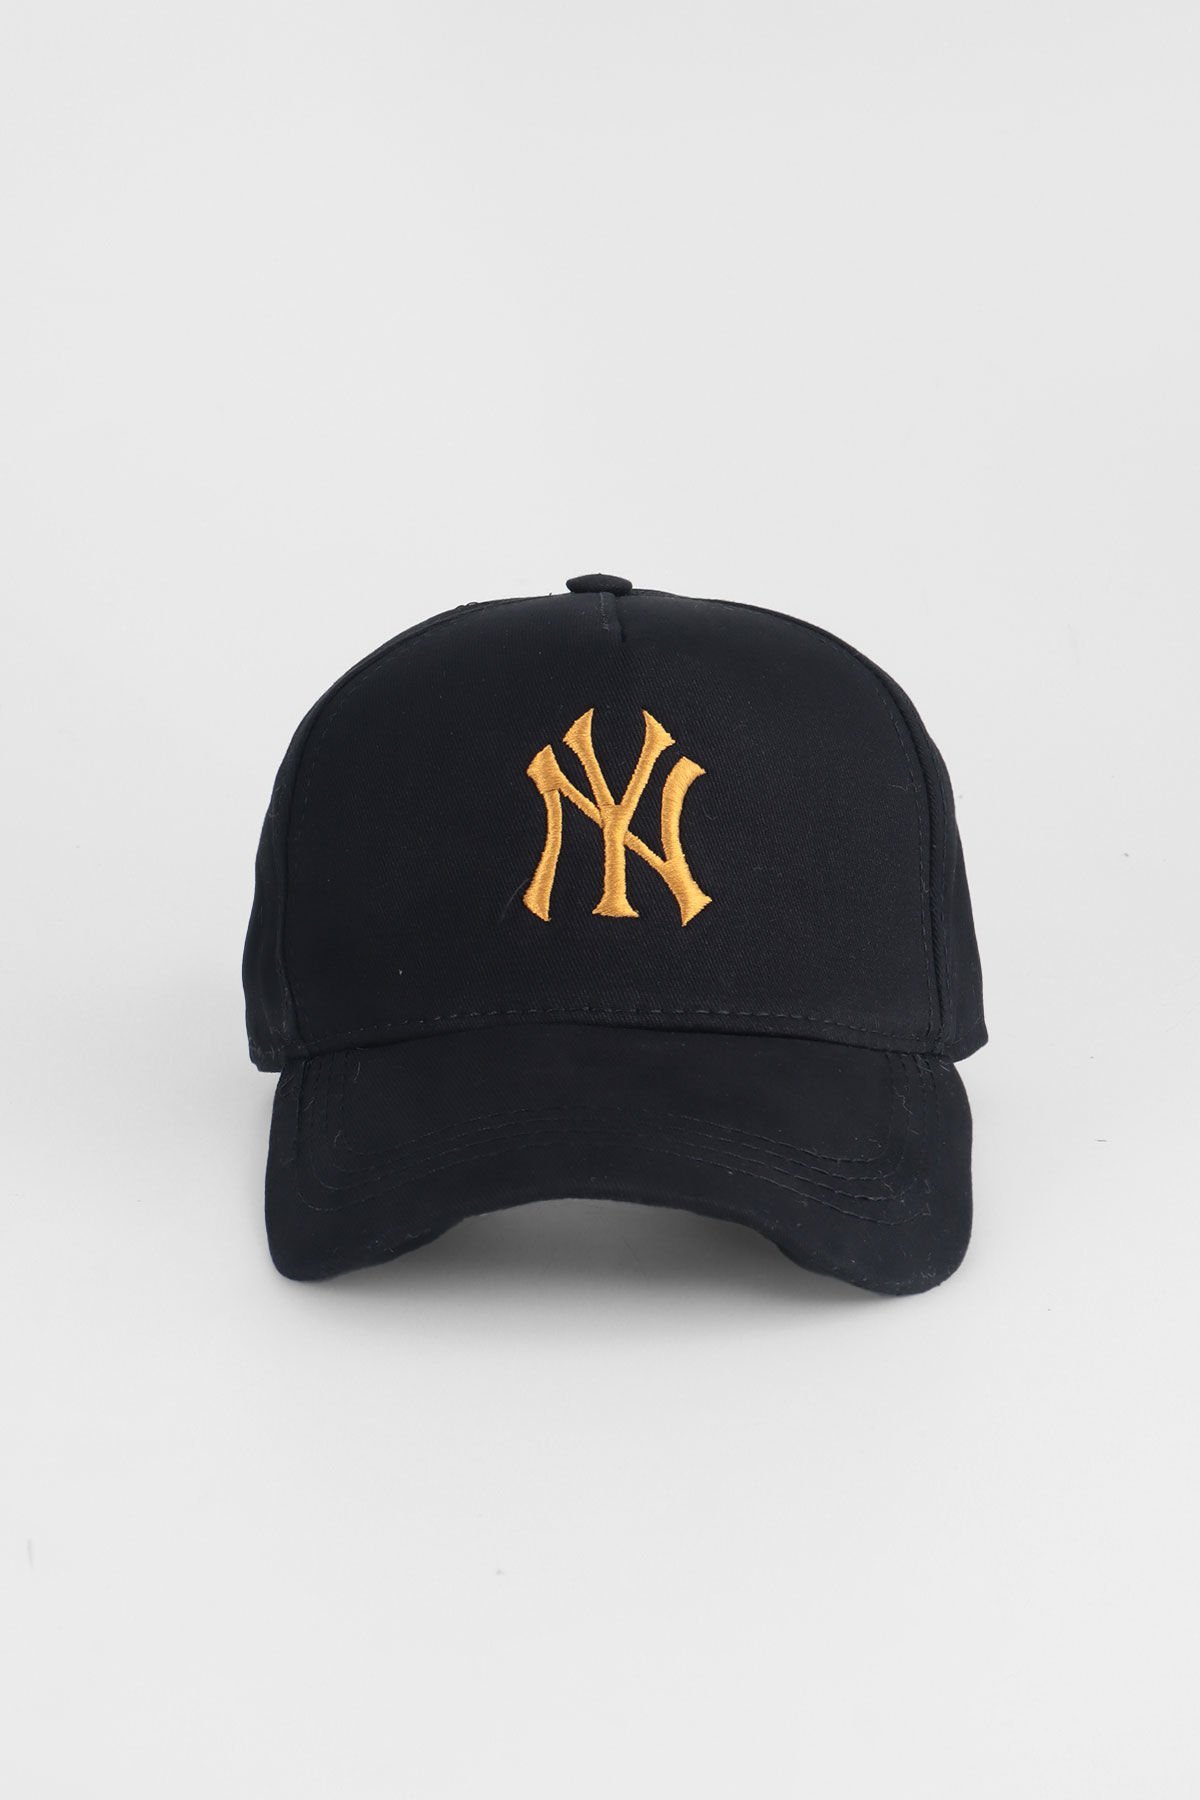 NY Gold Logolu Baseball Cap Şapka - Siyah